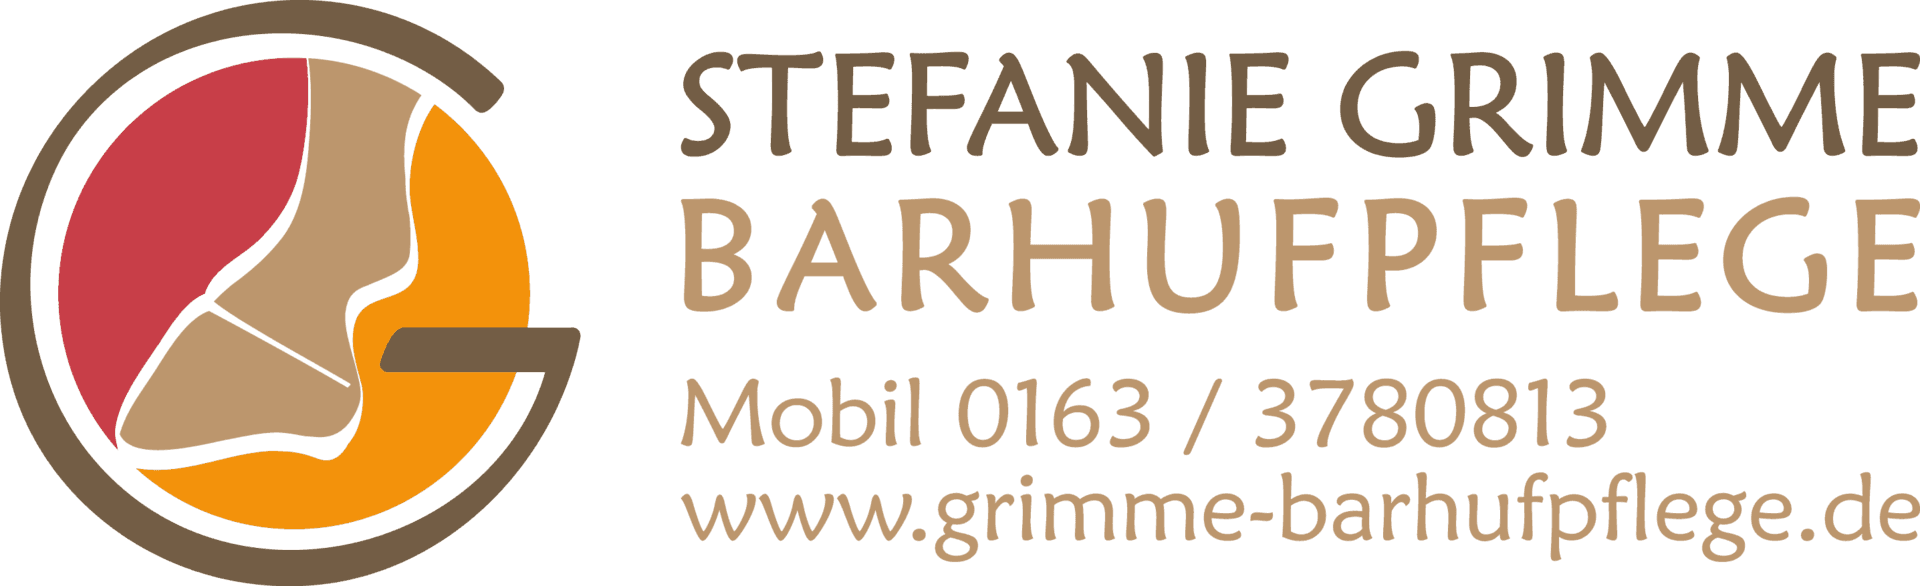 Stefanie Grimme Barhufpflege Kontaktdaten